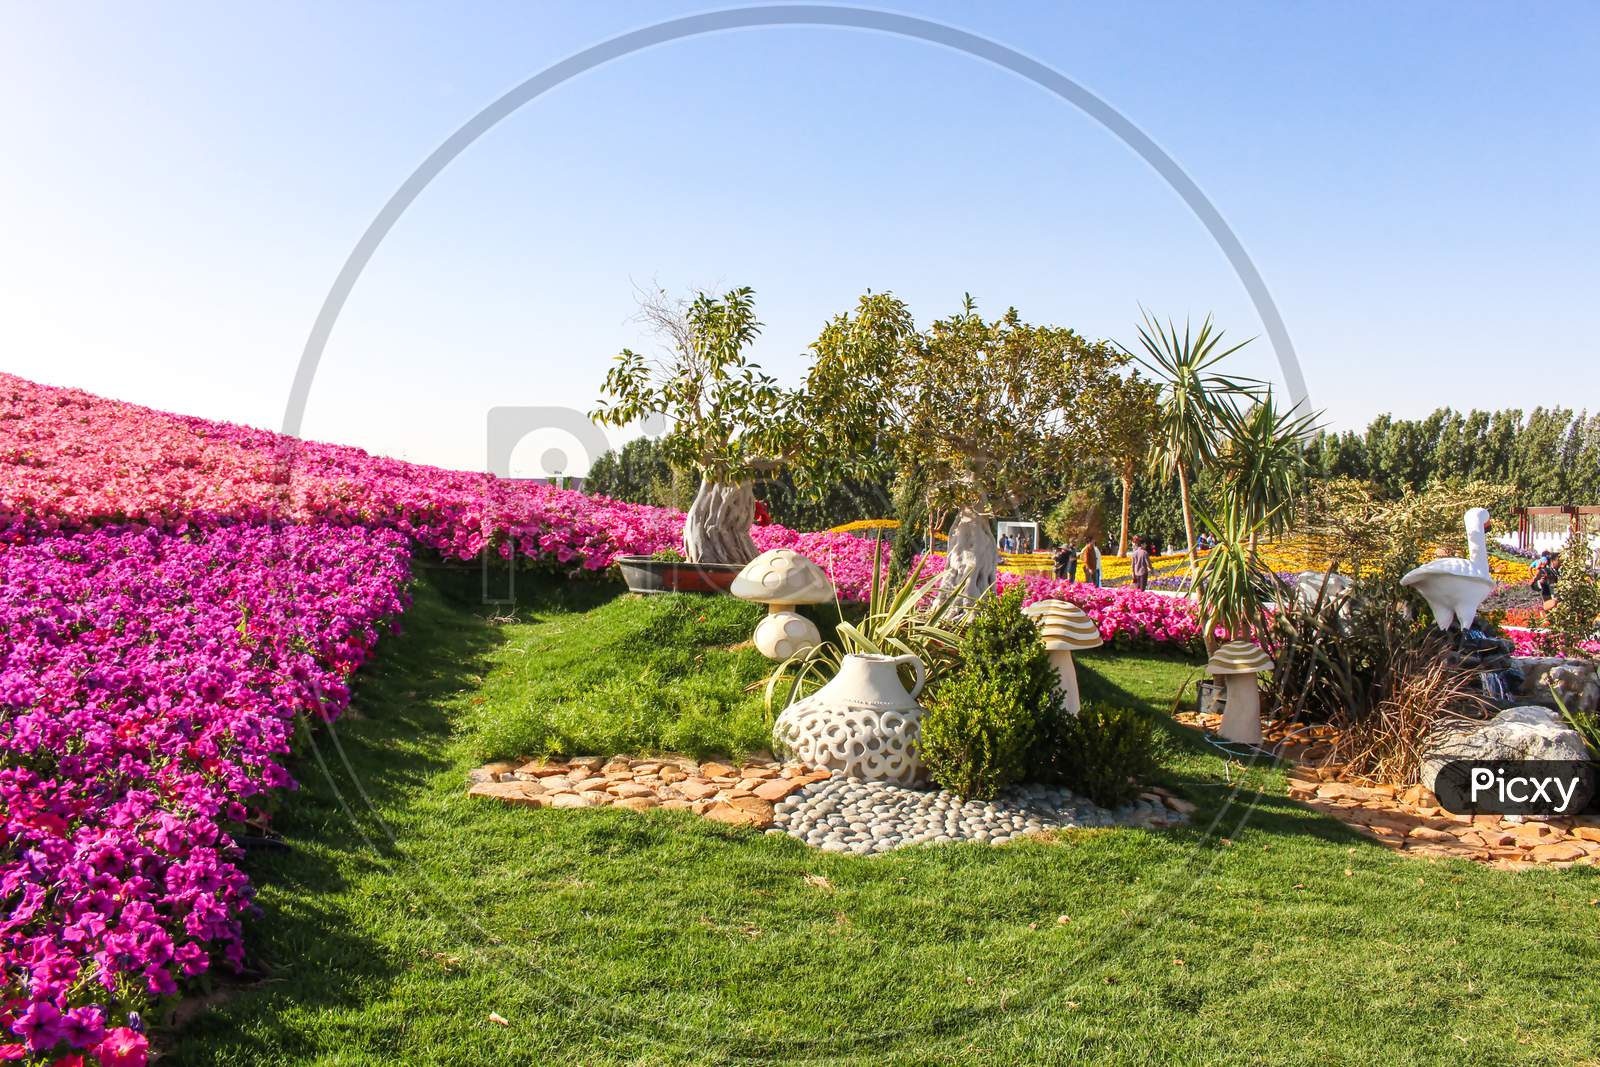 flower show in yanbu saudi arabia